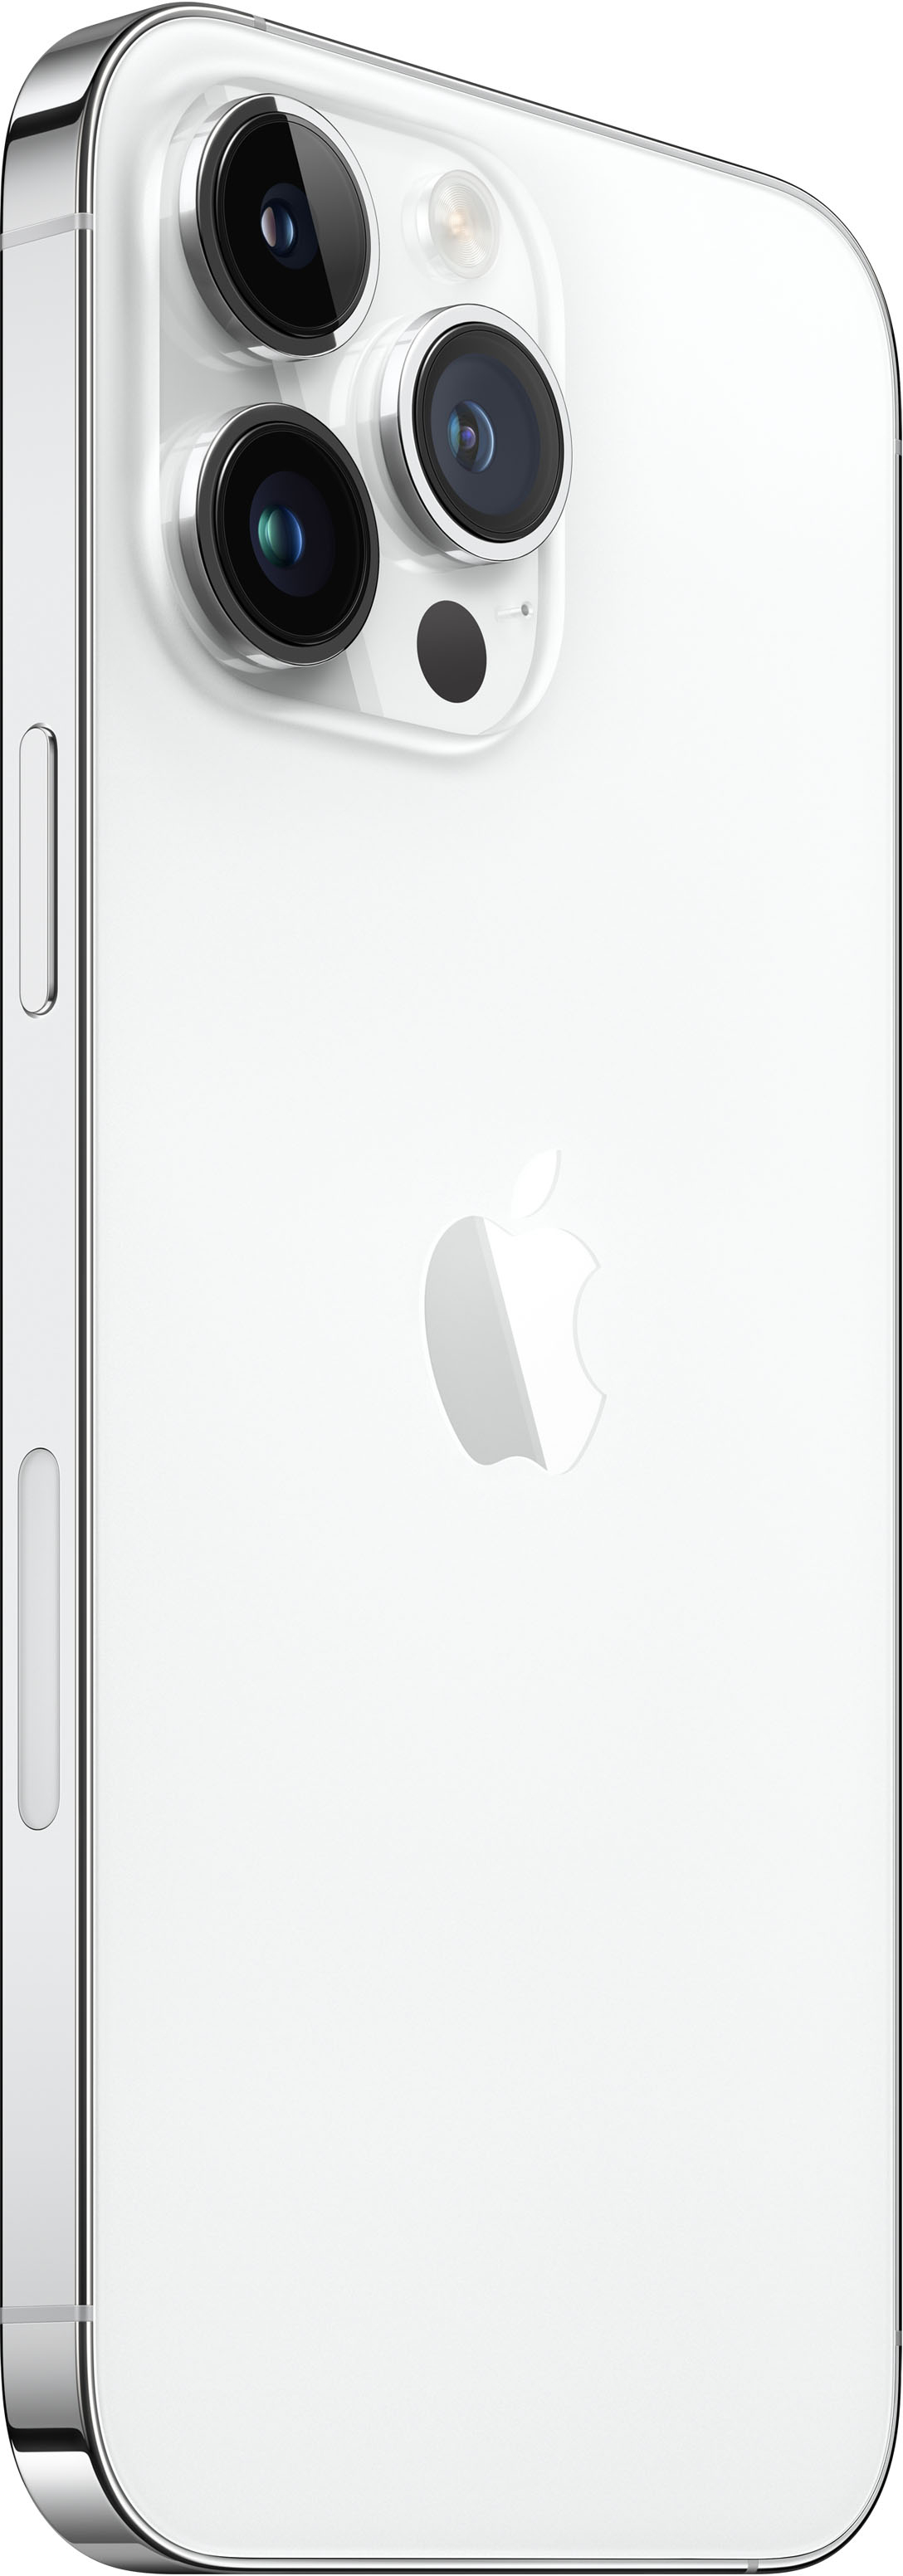 Apple iPhone 14 Pro Max 512GB Silver (Verizon) MQ8Y3LL/A - Best 